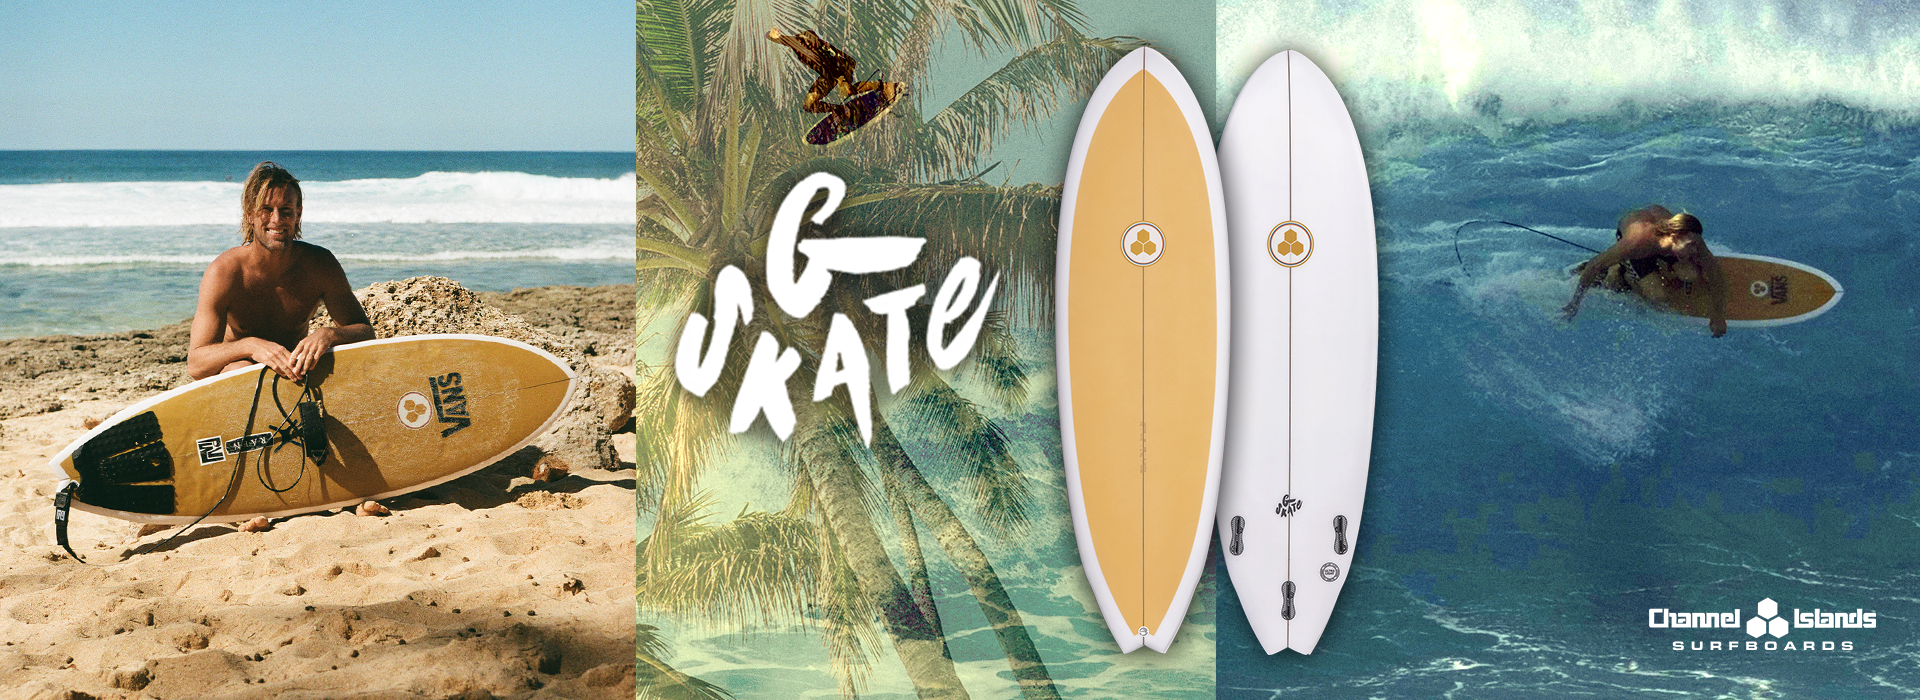 G Skate Model da Channel Islands Surfboards / Al Merrick Brasil - Projeto com irmãos Gudauskas